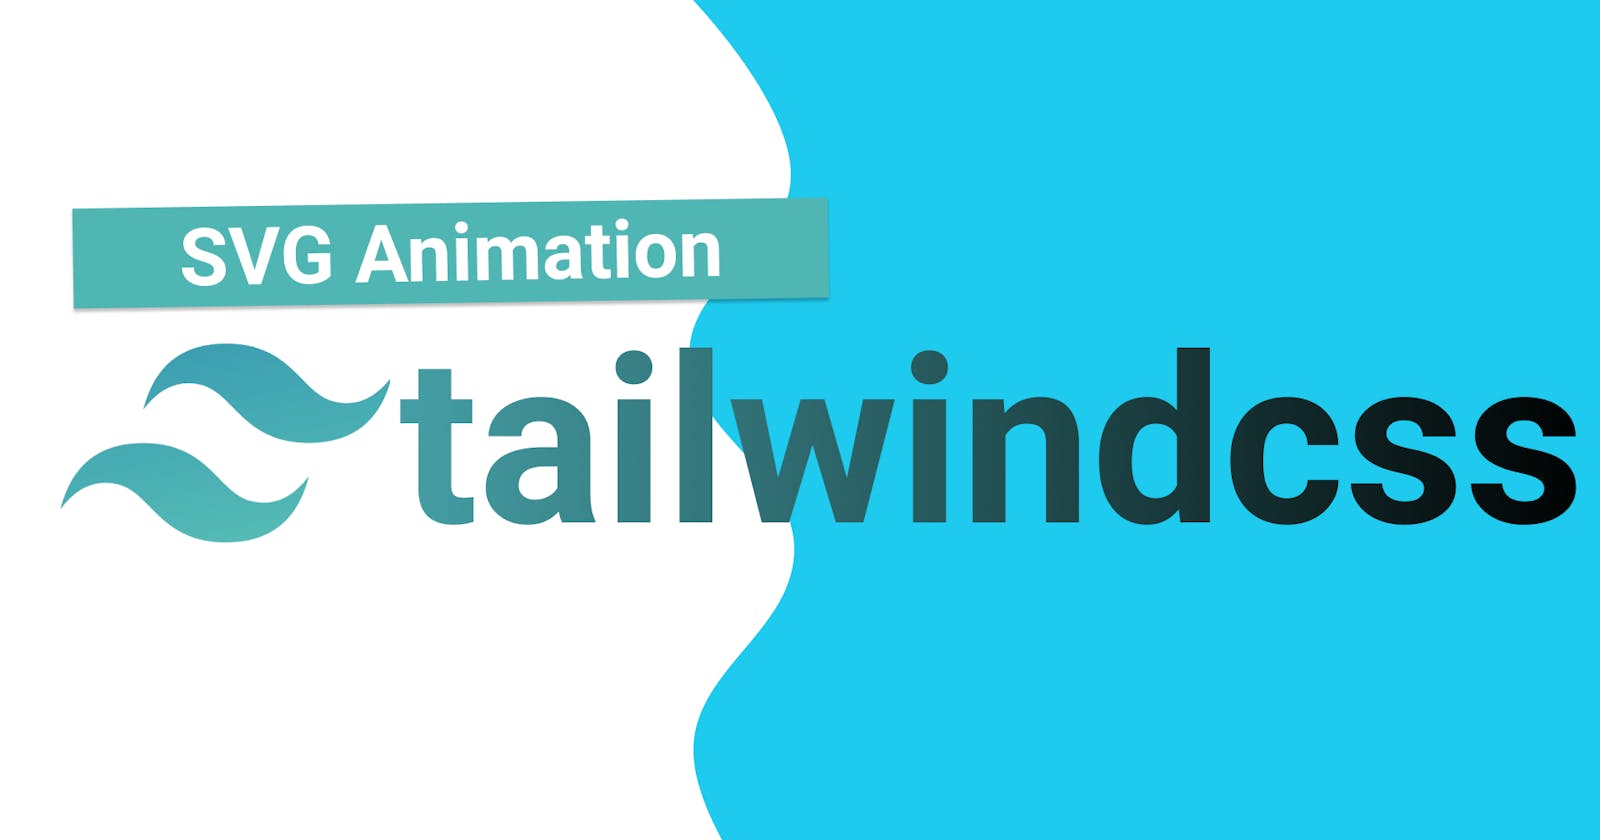 SVG Animation using Tailwindcss